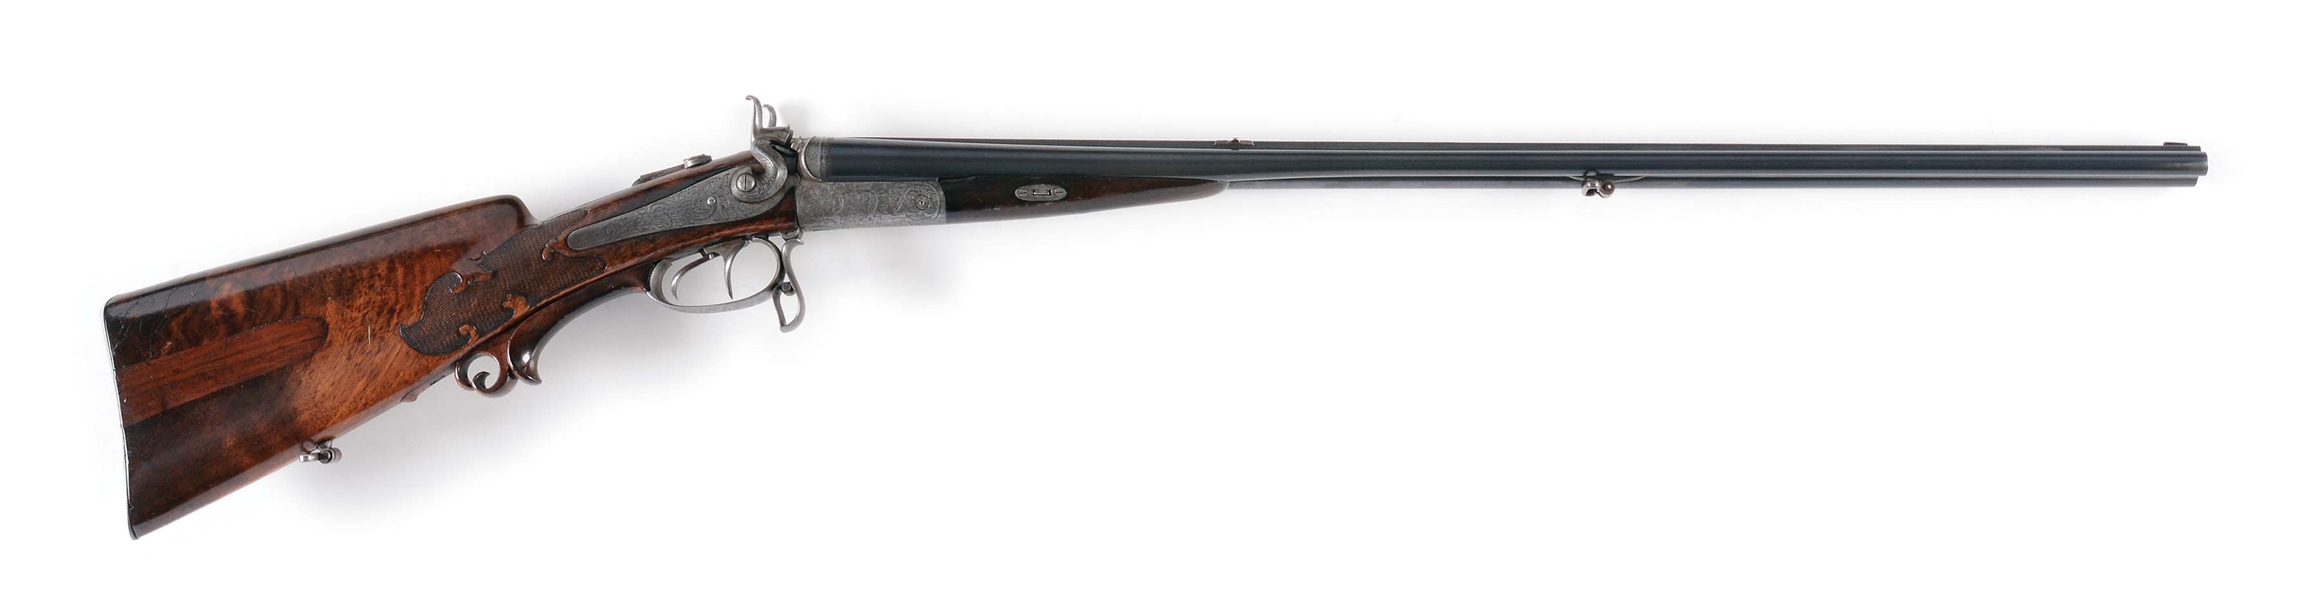 (C) C. STEIGELE MUNIC COMBINATION GUN IN 8.7MM X 16 BORE SHOTGUN.